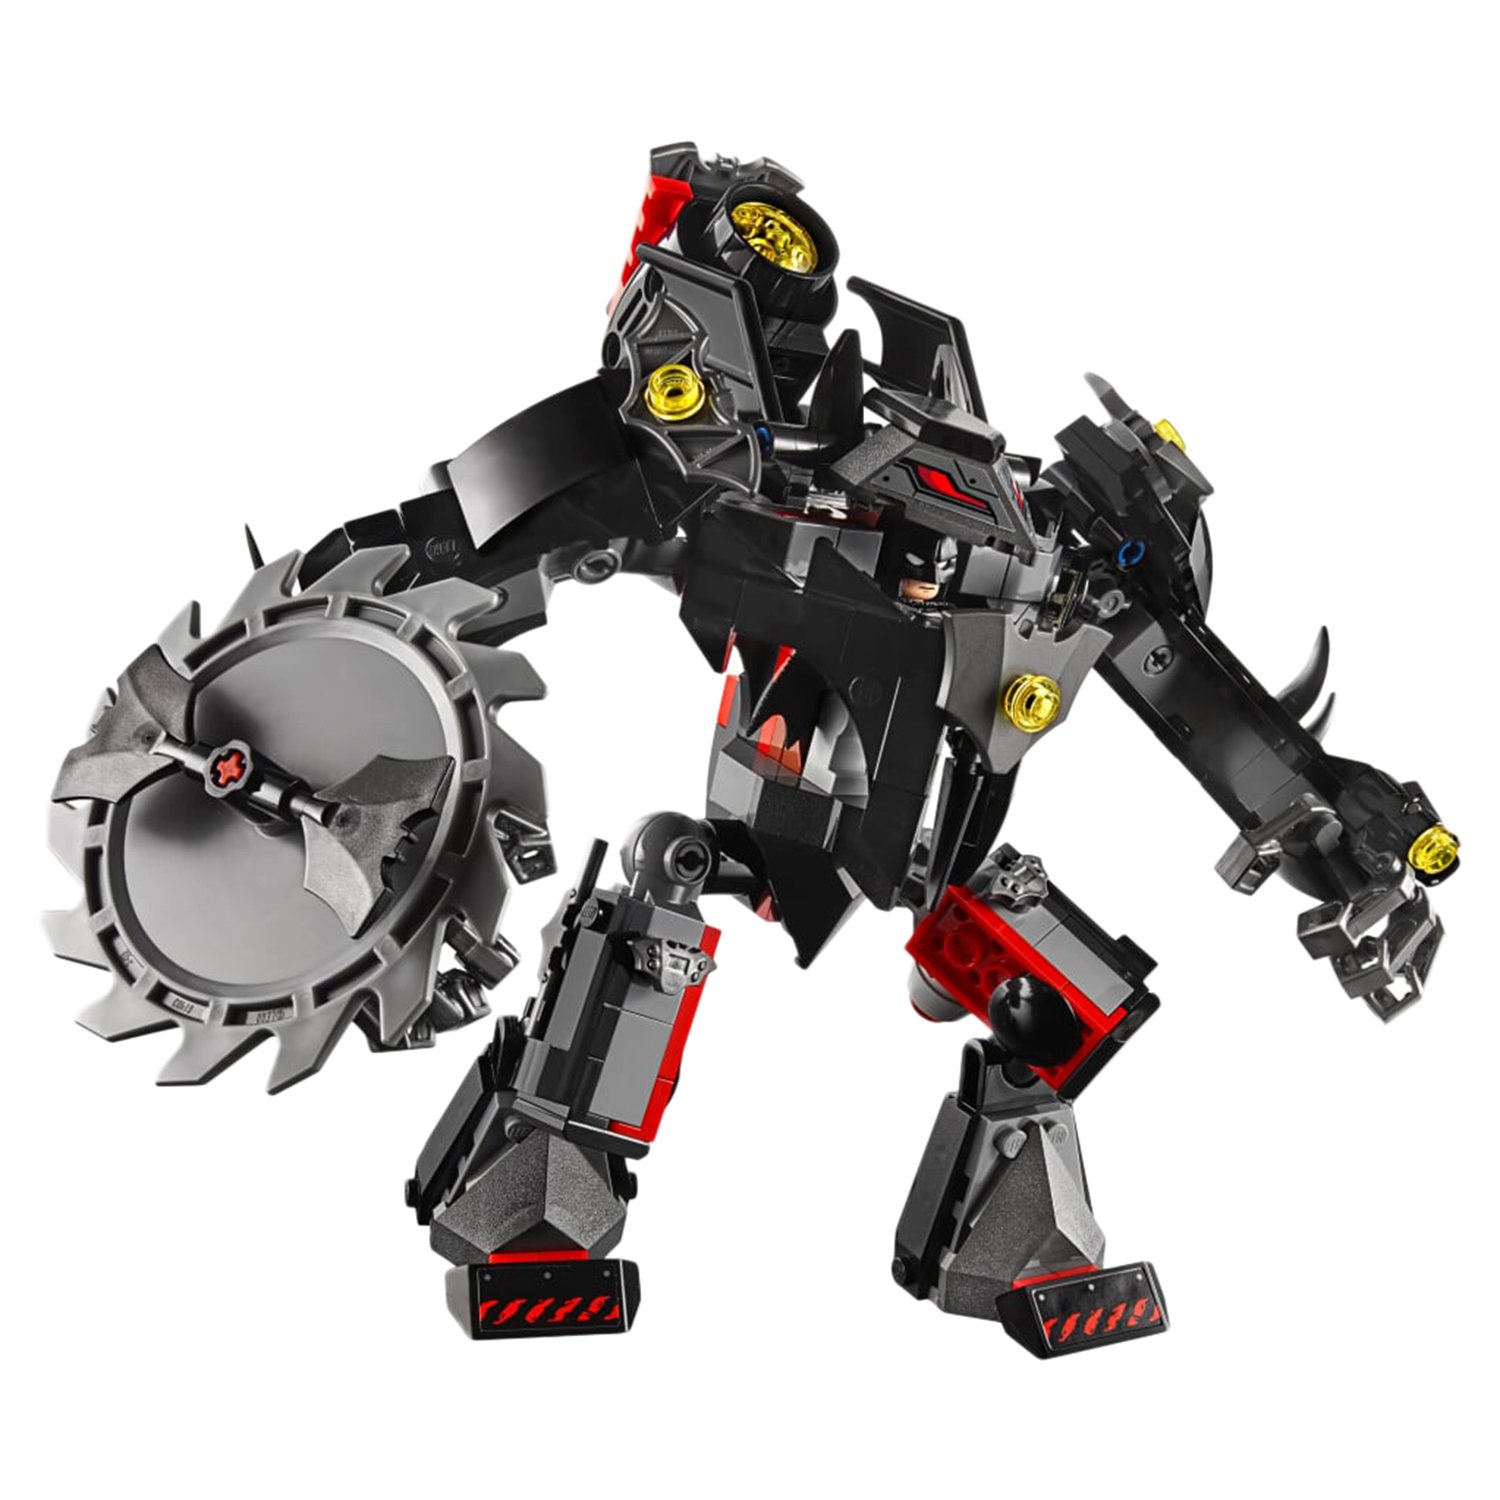 Конструктор LEGO Super Heroes «Робот Бэтмена против робота Ядовитого Плюща» 76117